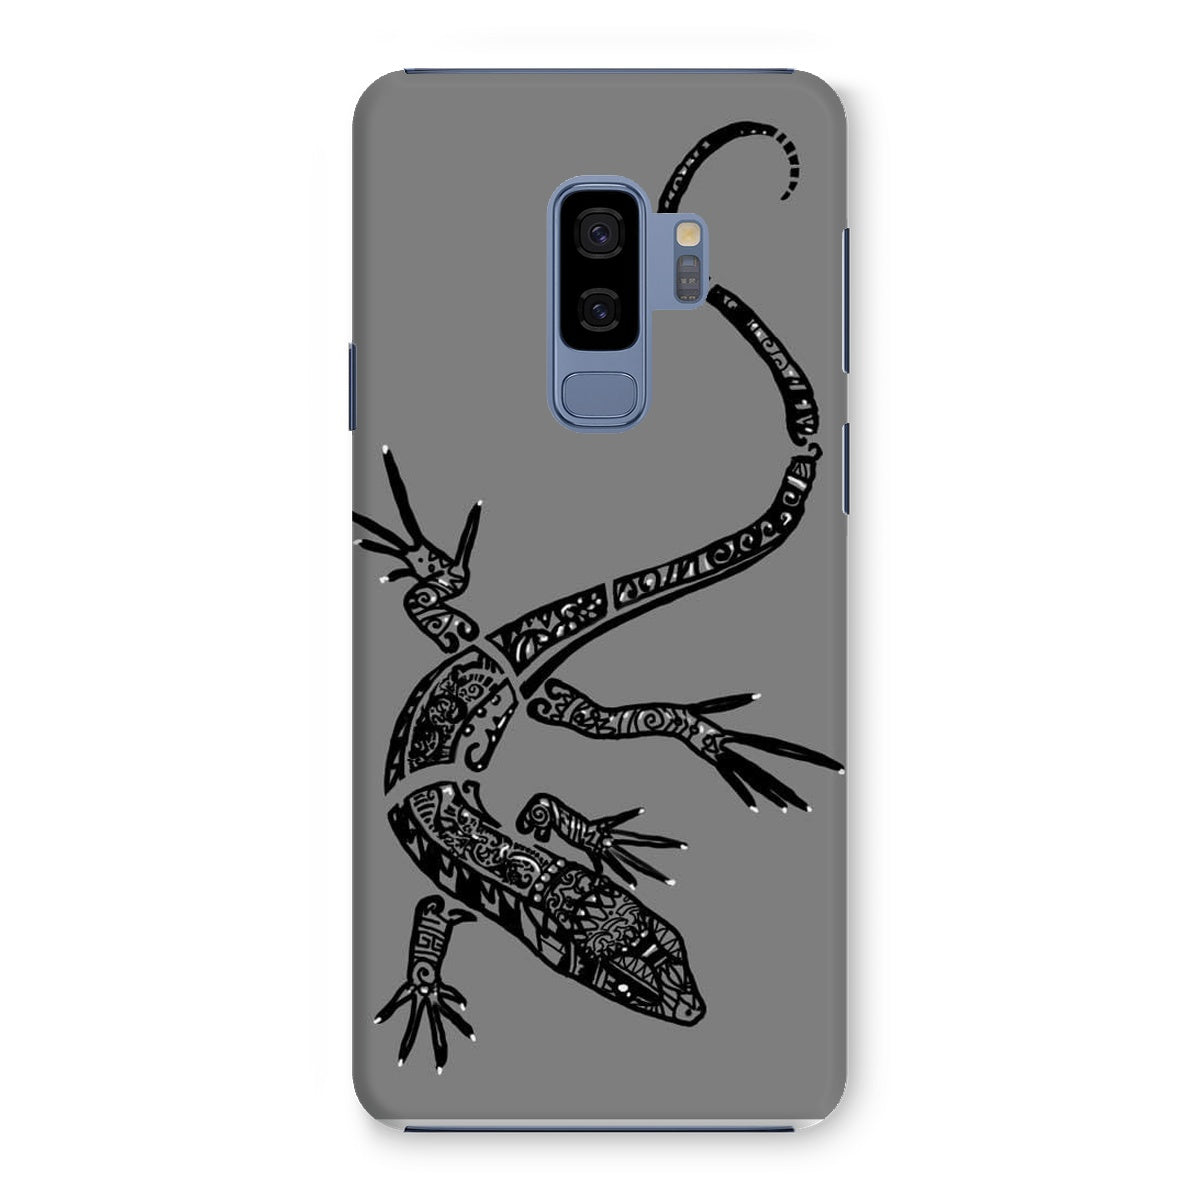 Snap Lizard Phone Case